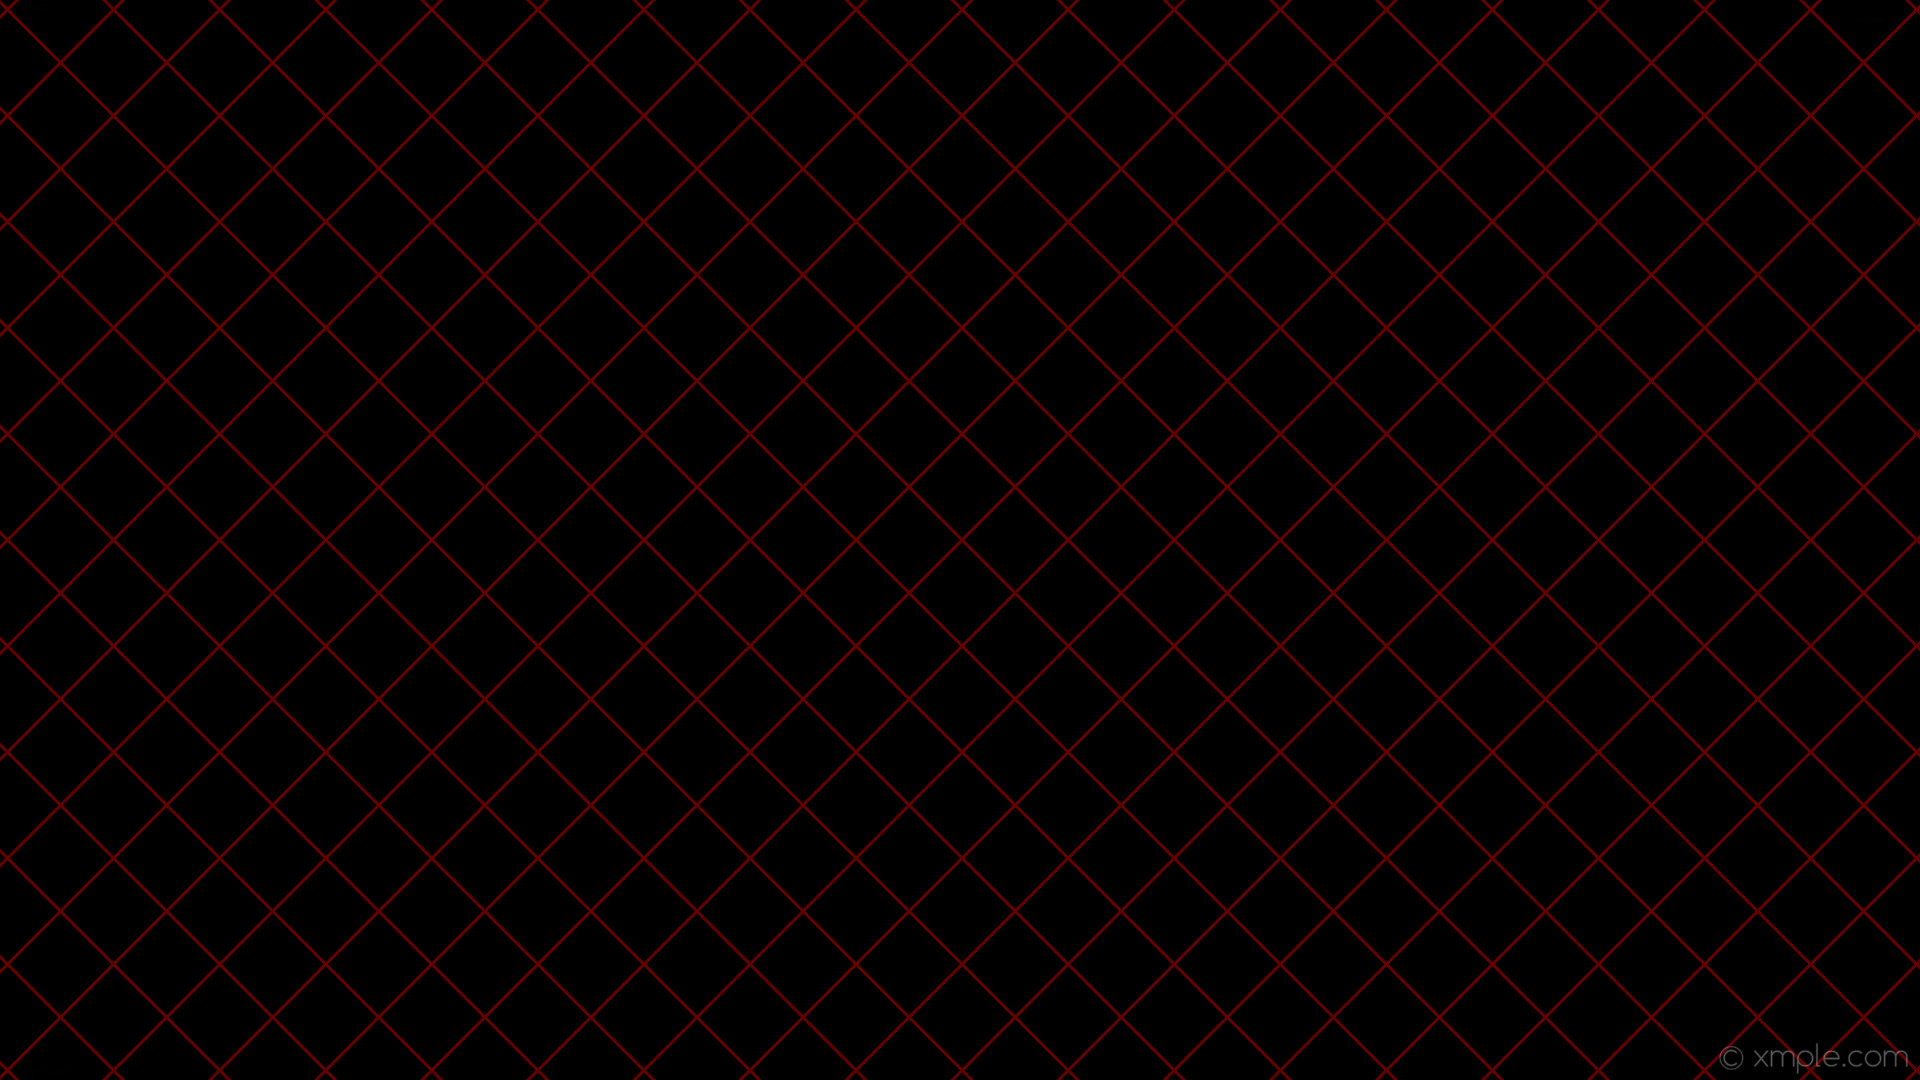 1920x1080 wallpaper black red graph paper grid dark red #000000 #8b0000 45Â° 3px 75px